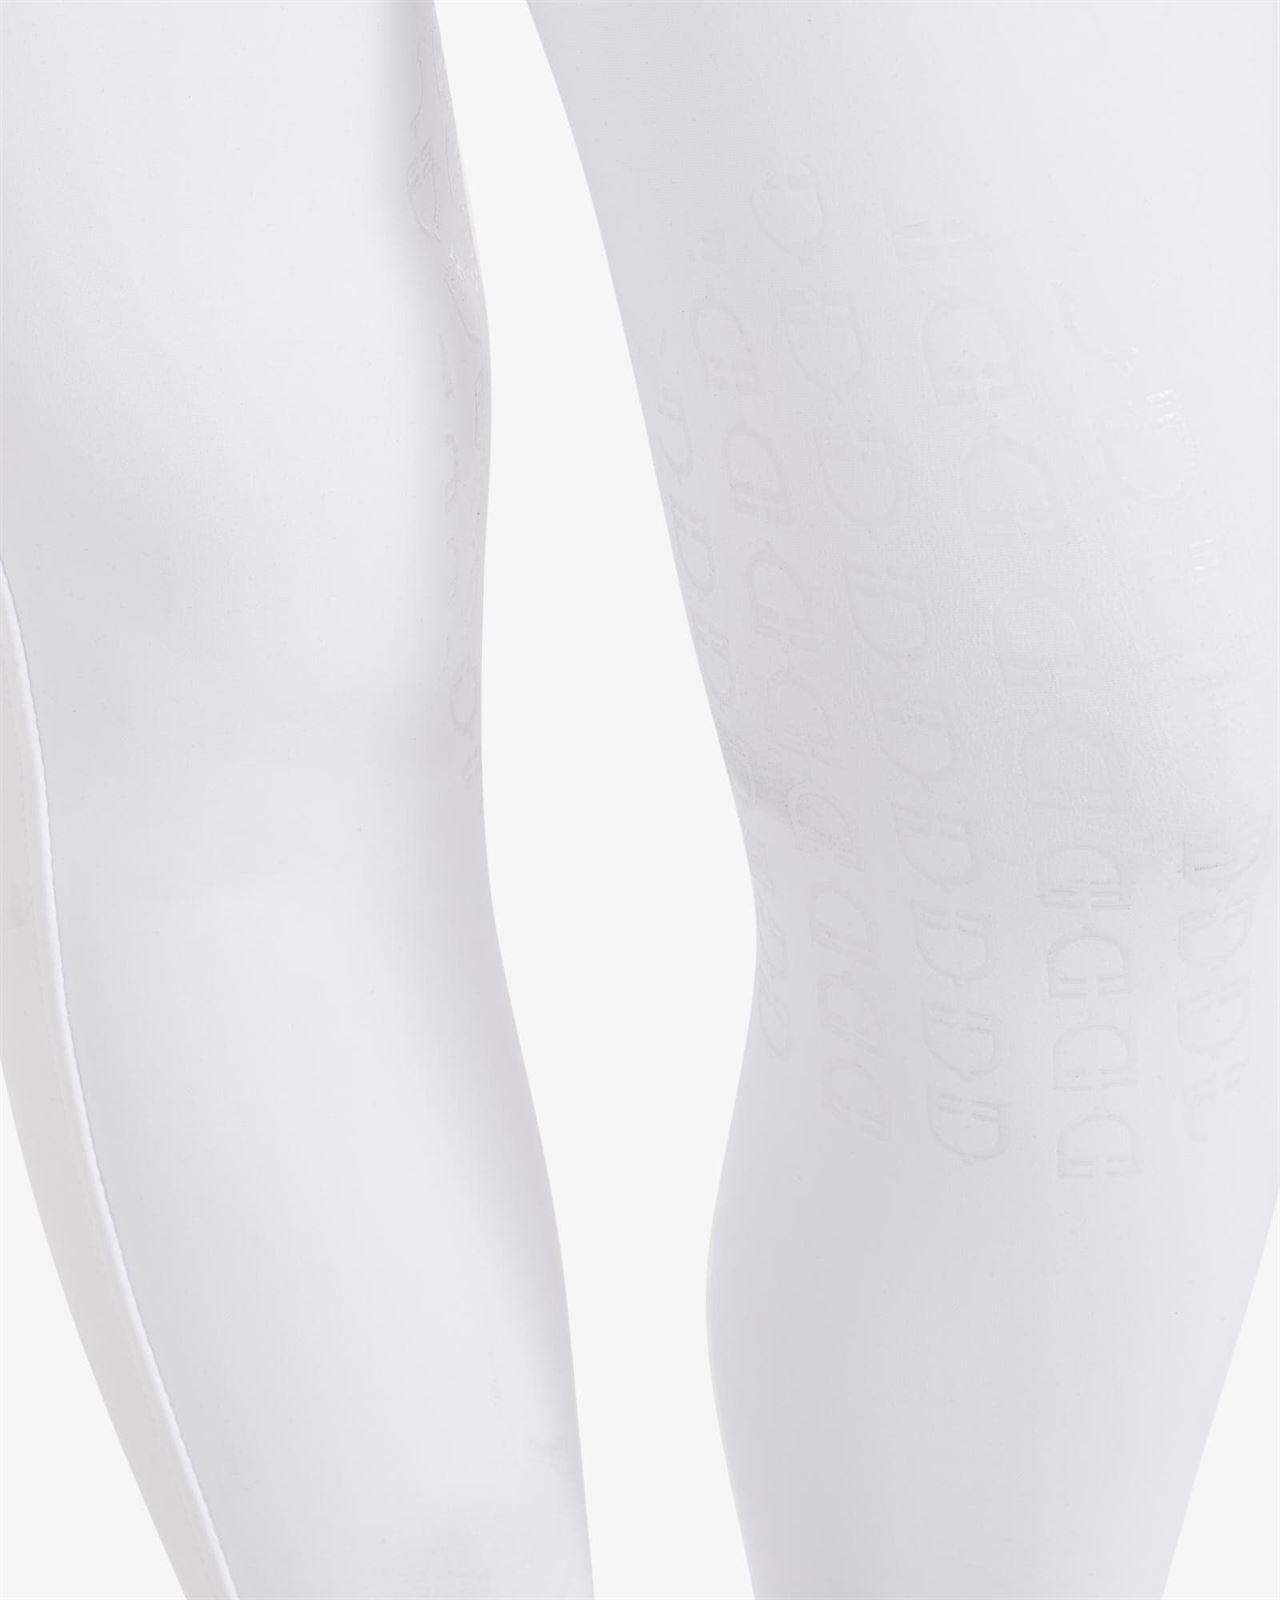 Pantalón unisex EQUESTRO color blanco, grip rodilla, tejido grueso, tallaje infantil - Imagen 5